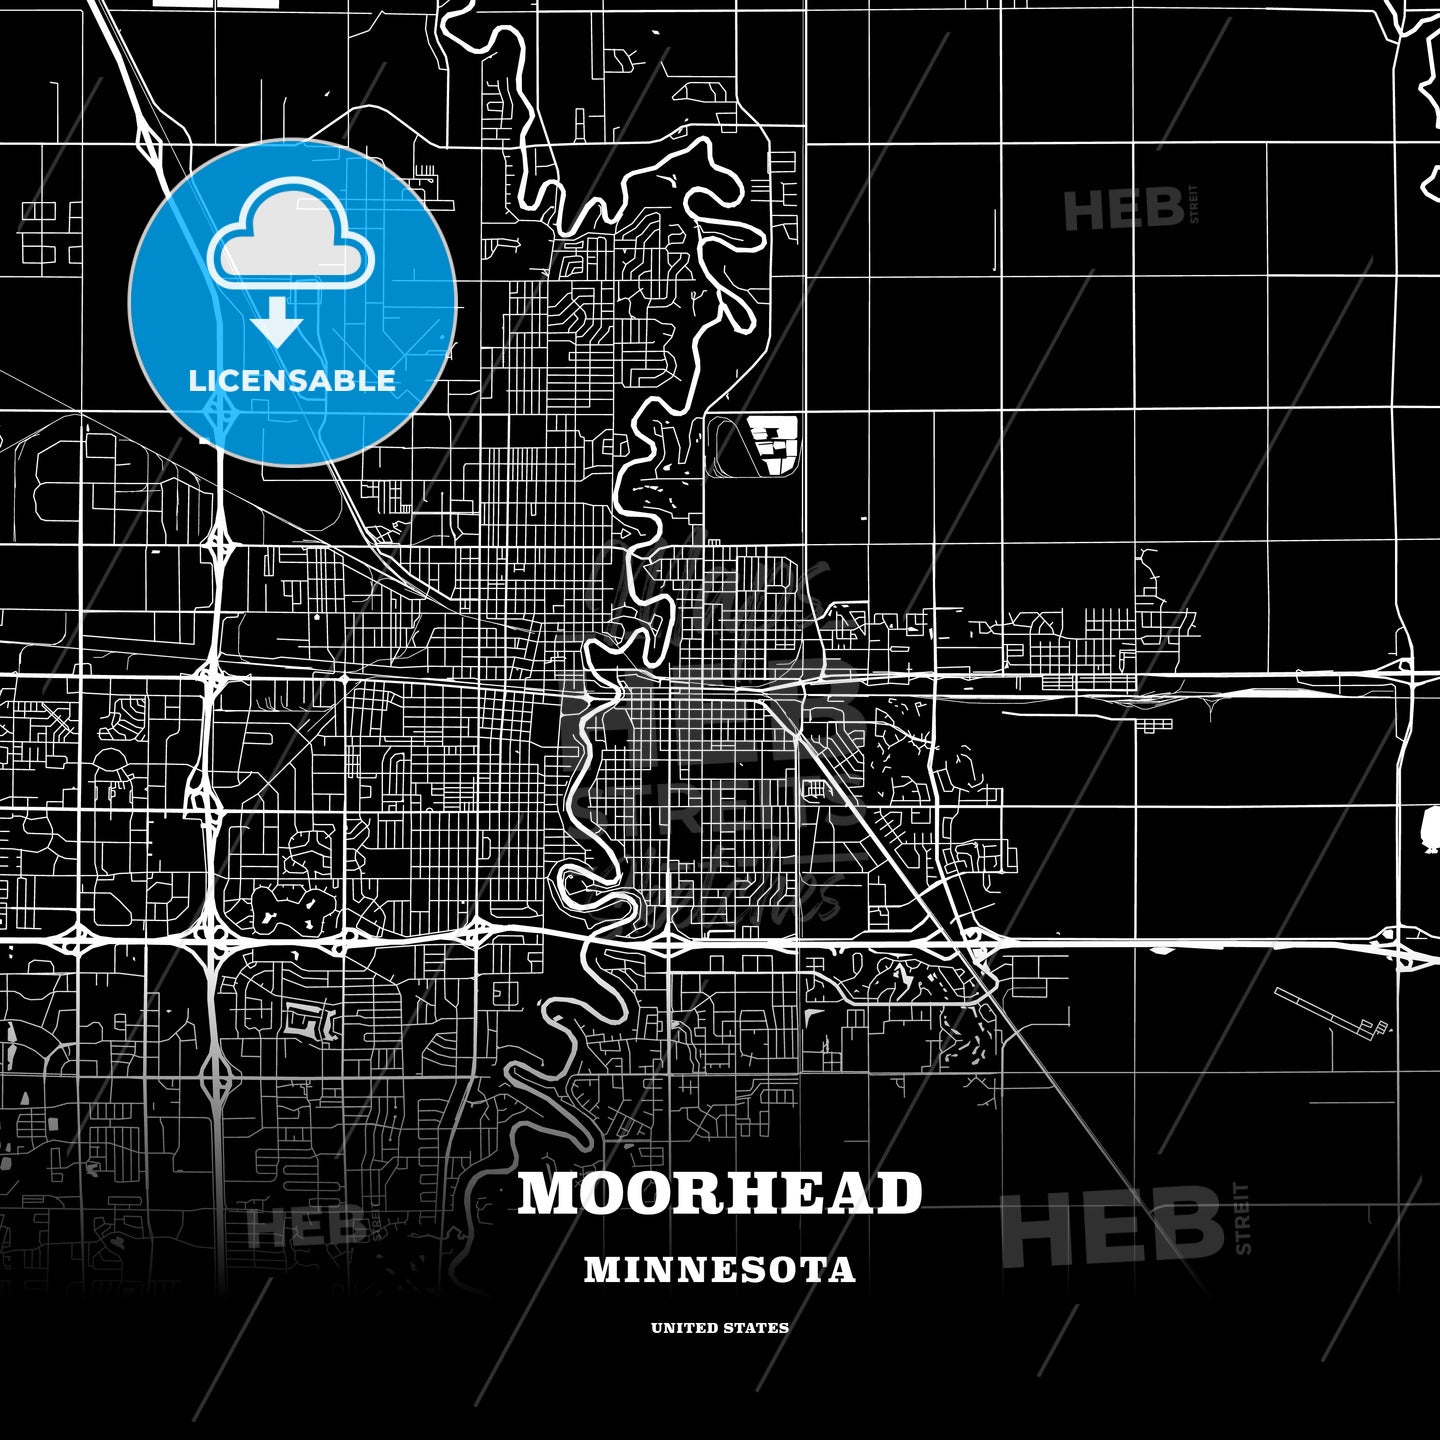 Moorhead, Minnesota, USA map